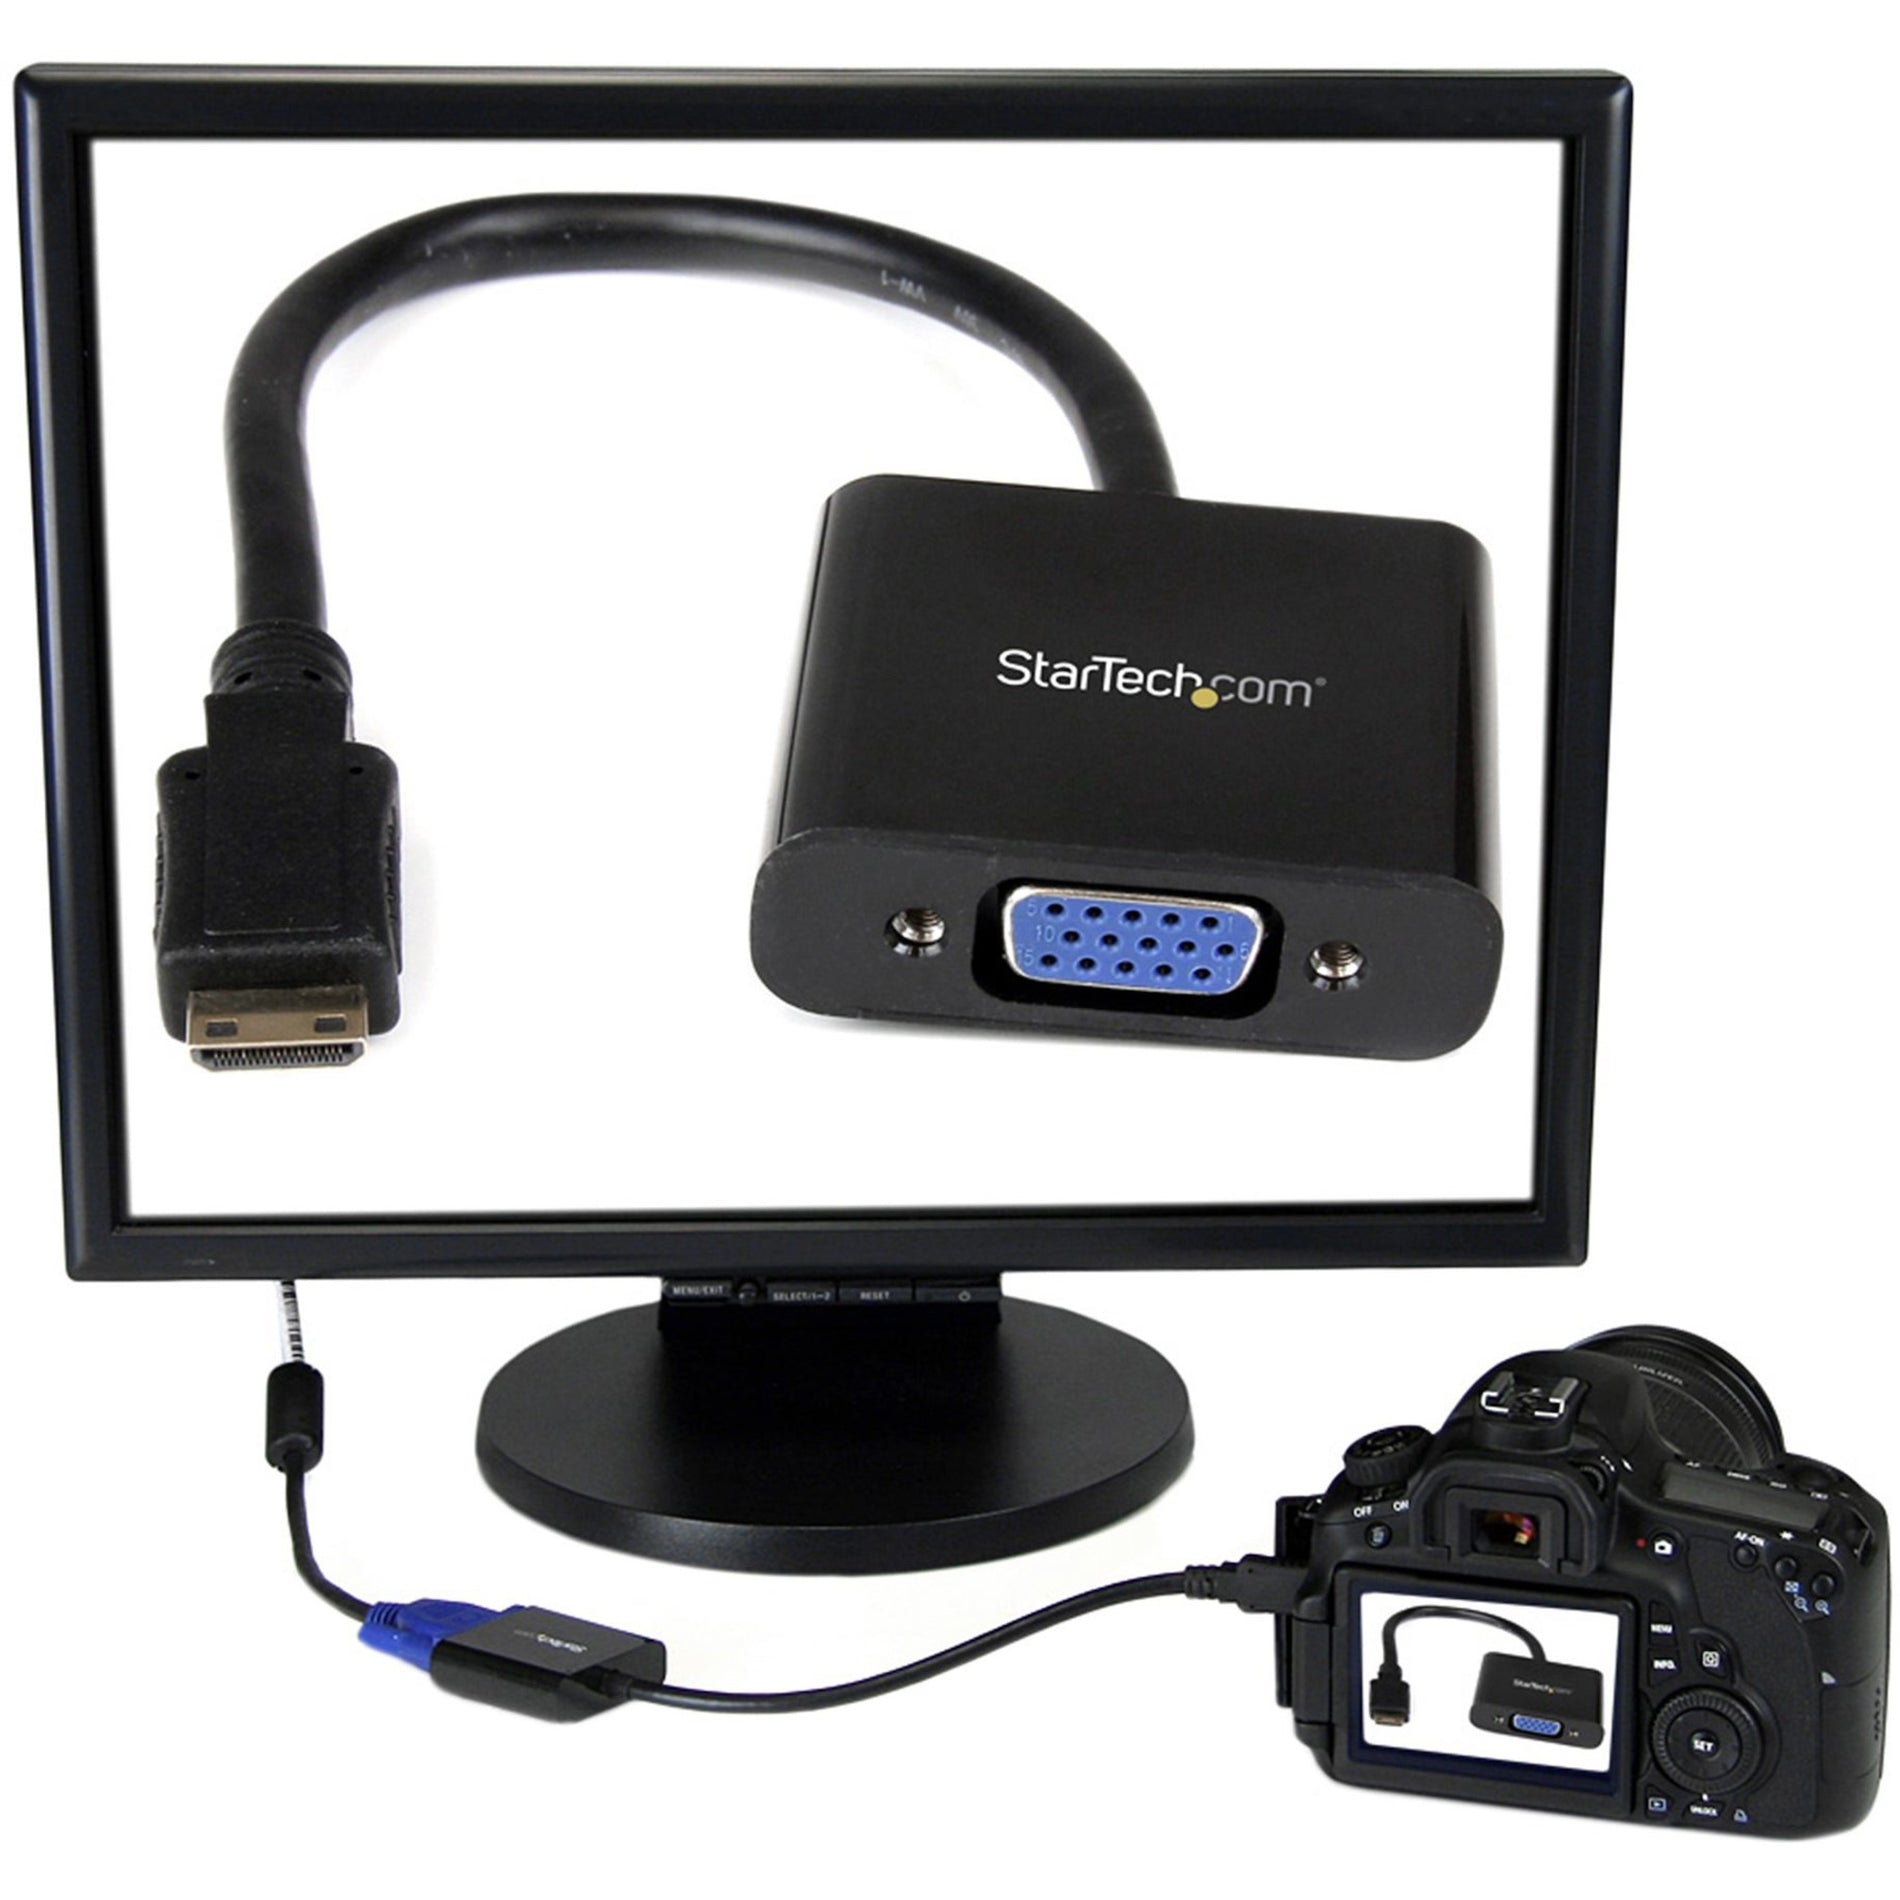 StarTech.com MNHD2VGAE2 HDMI/VGA Video Cable Adapter, Mini HDMI to VGA Converter for Digital Still Camera / Video Camera - 1920x1200